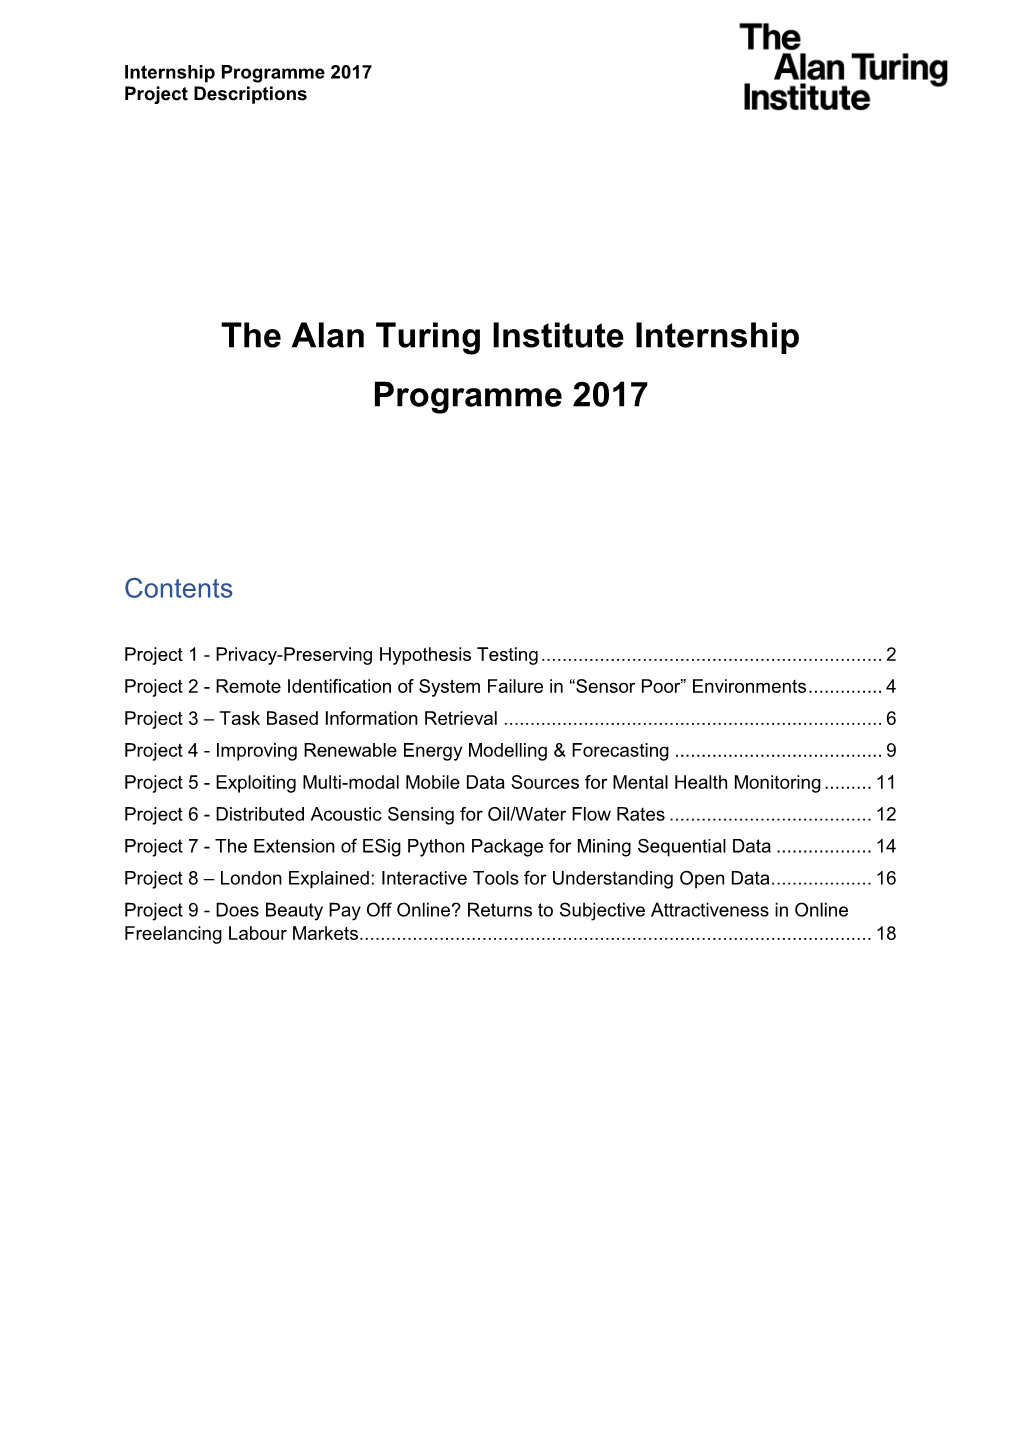 The Alan Turing Institute Internship Programme 2017